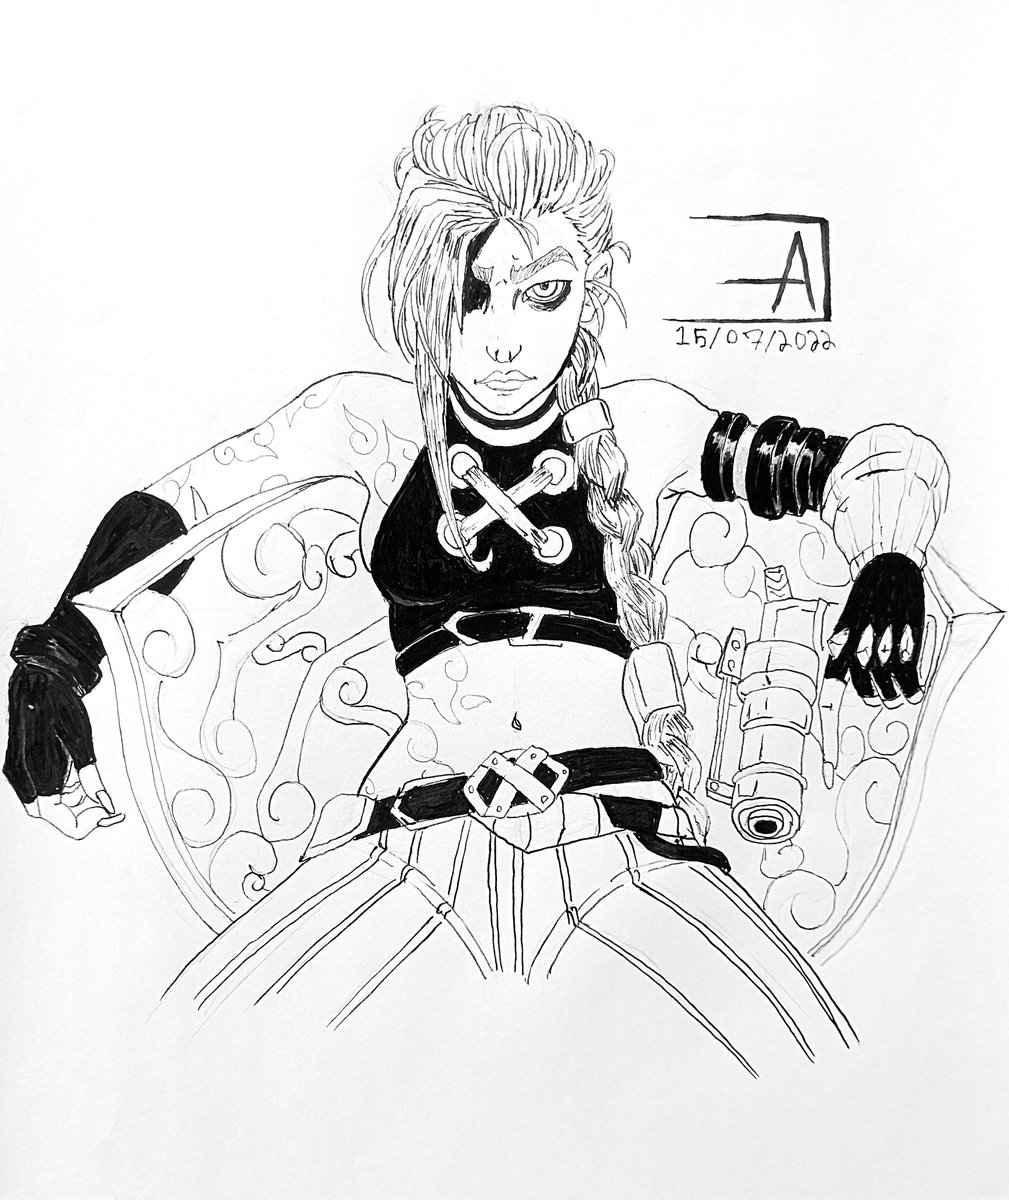 Jinx 🔥😈🔥☠😏💀

#Jinx #arcane #arcanefanart #LeagueOfLegends #girlpower #robotgirl #robotgirls #garotas #gothicgirl #gothic #Dark #tattoos #tattooart #anime #AnimeArt #comic #comicart #cartoon #arterealista #digitalart #INK #PortfolioDay #cyberpunk